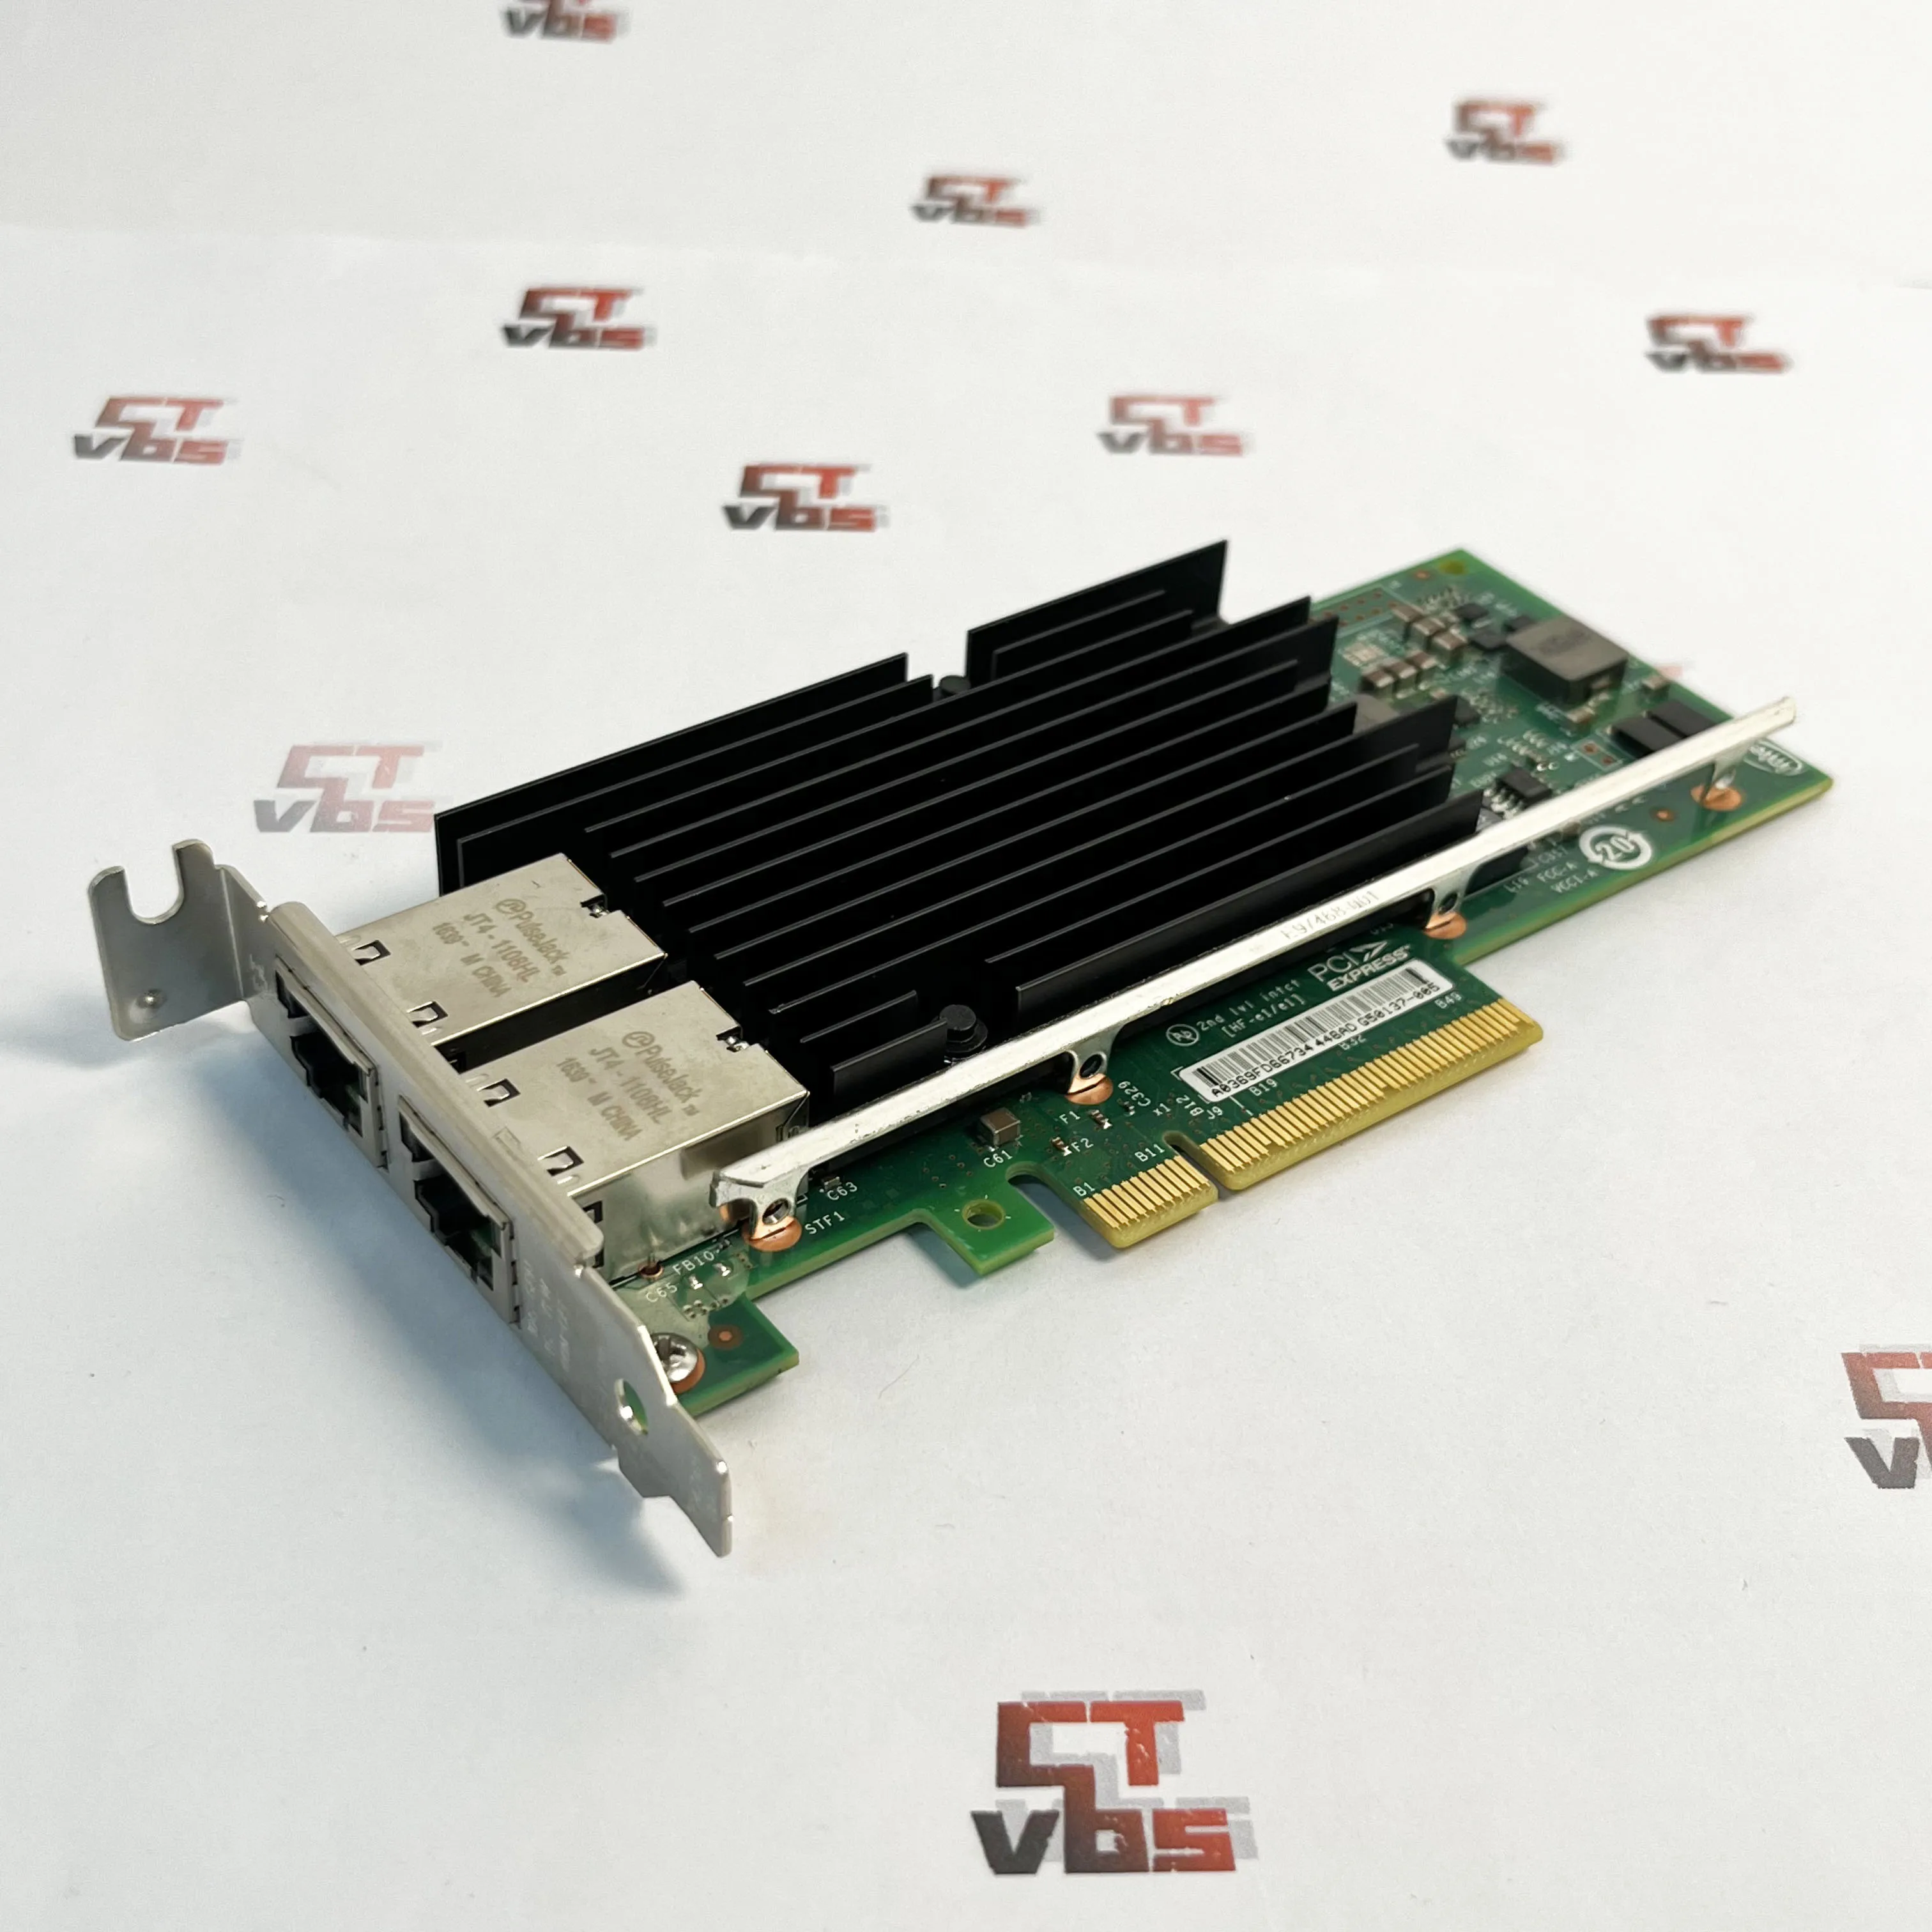 X540-T2 Intel X540 Chipset PCIe x8 Dual Copper RJ45 10Gbps Port Ethernet Network Card Compatible